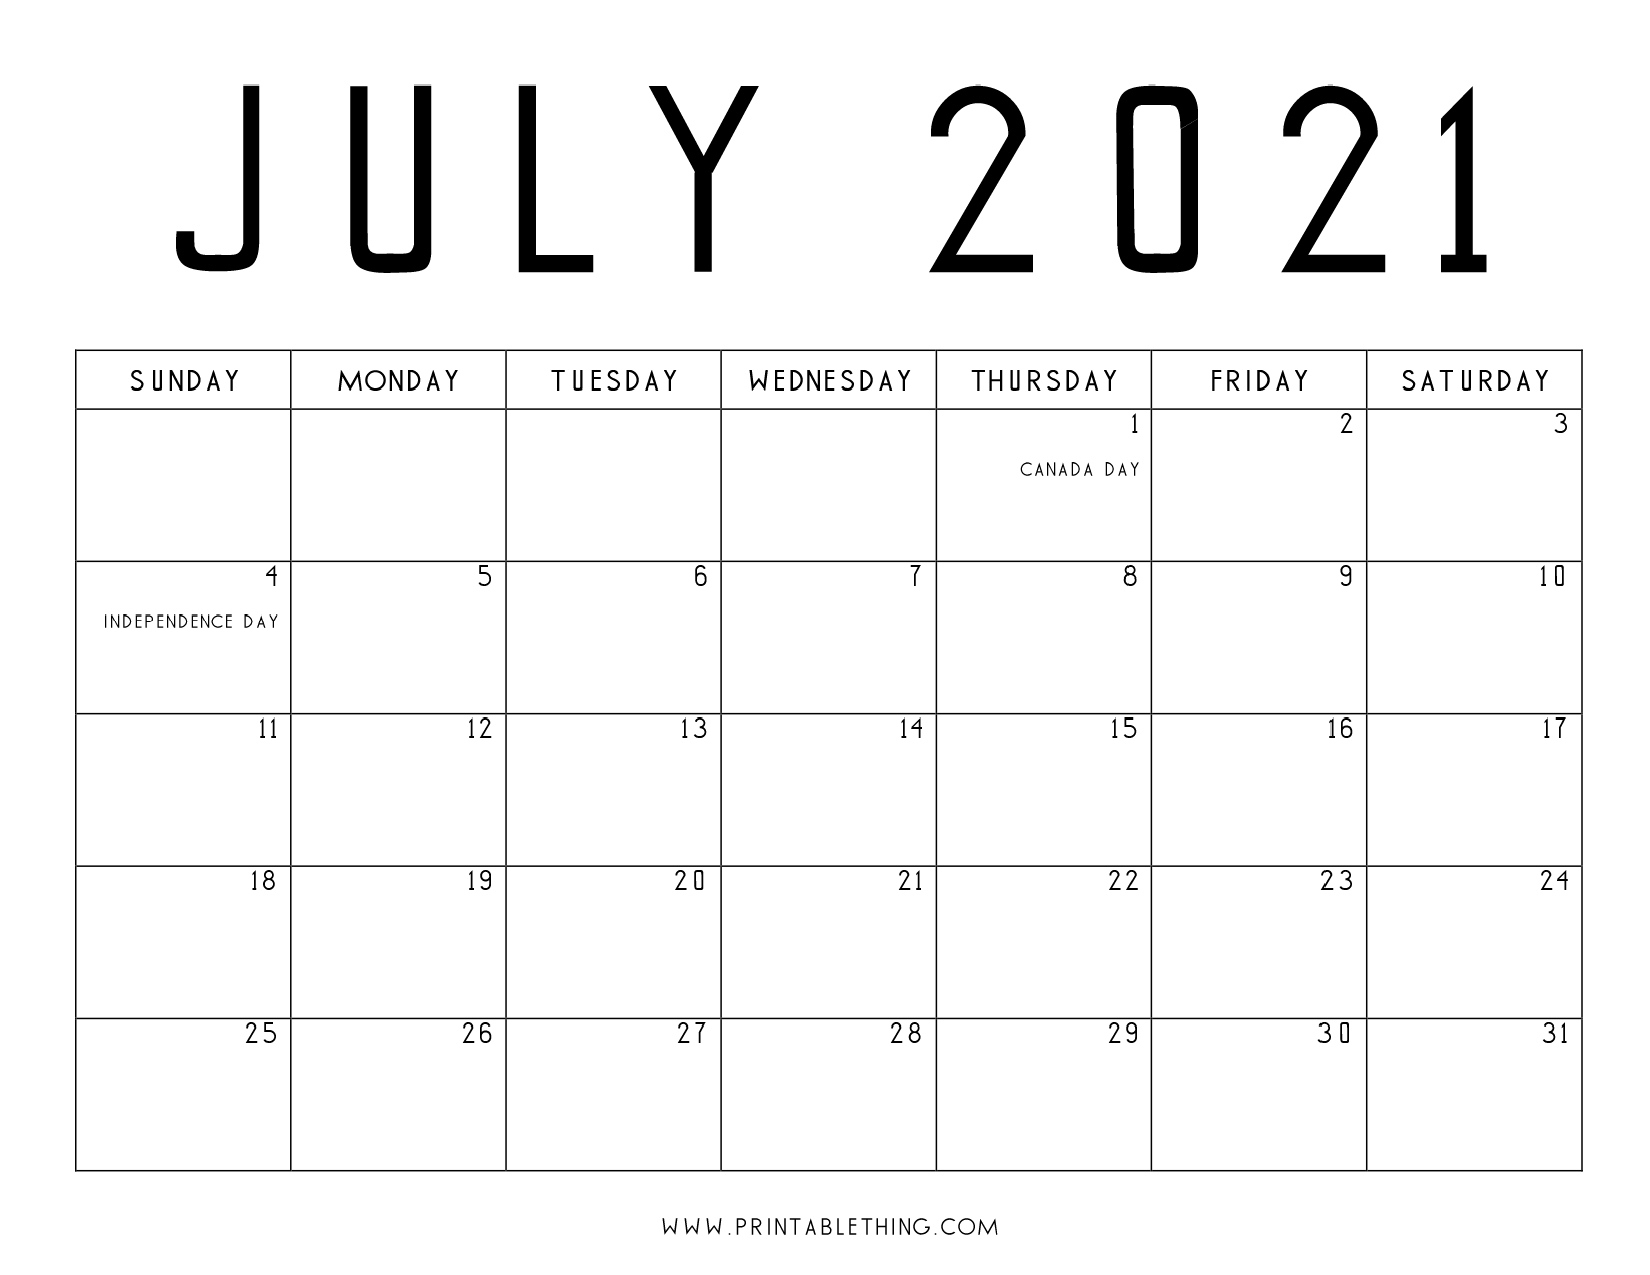 July 2021 Calendar Pdf, July 2021 Calendar Image, Print Pdf &amp; Image Printable July To December 2021 Calendar